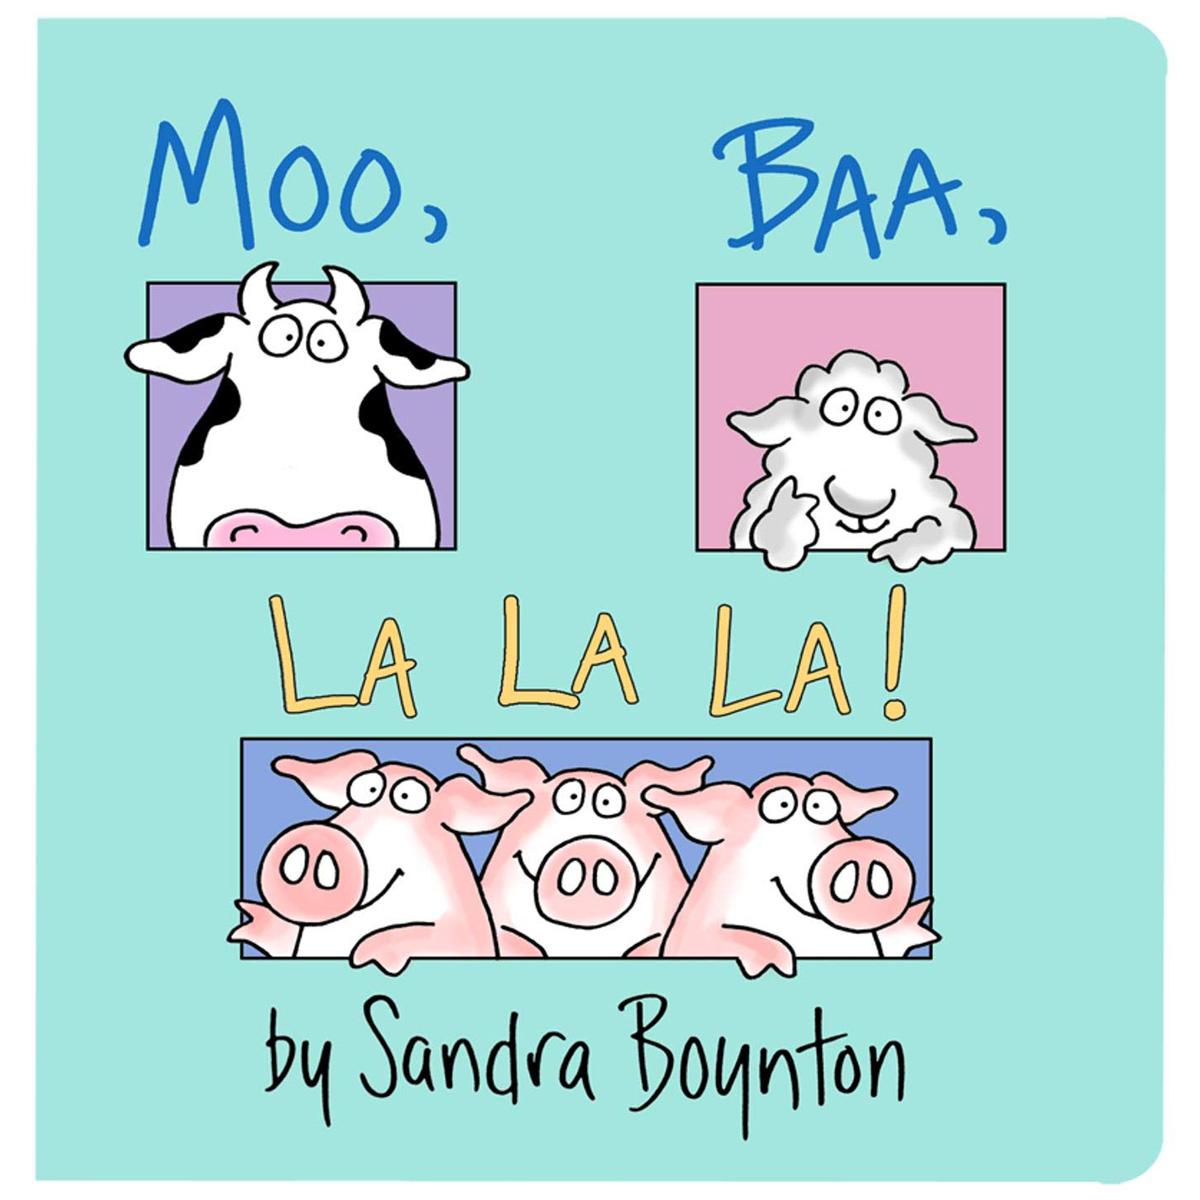 Moo Baa La La La Board Book by Sandra Boynton for $2.95